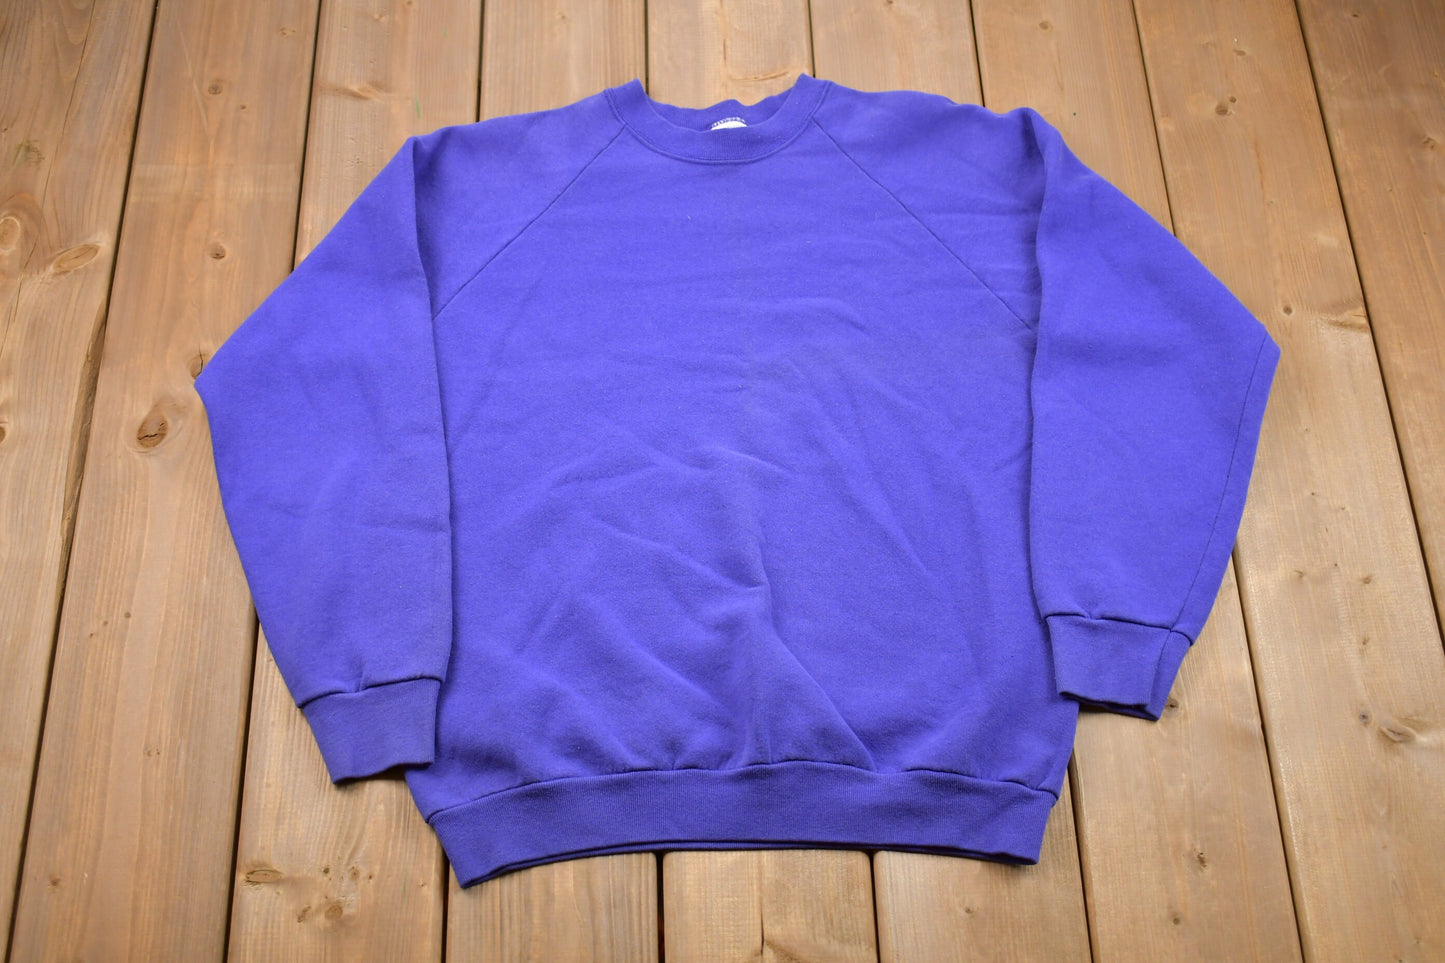 Vintage 1992 Fruit Of The Loom Made In USA Raglan Crewneck Sweatshirt / 90s Crewneck / Souvenir / Athleisure / Streetwear